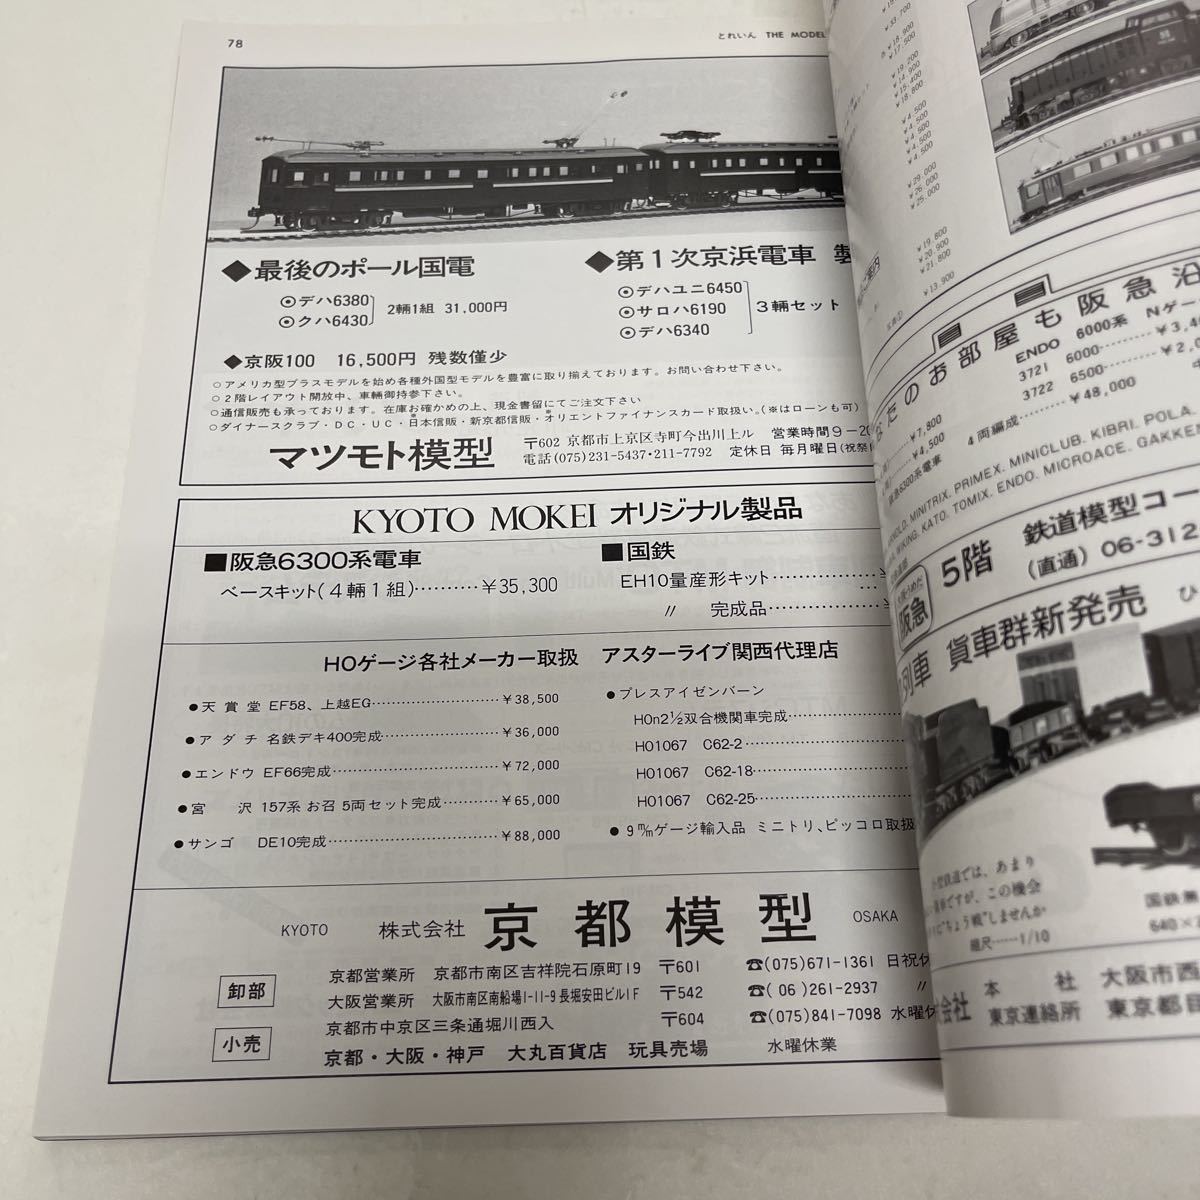  Train TRAIN 1986 год 4 месяц номер no.136. внезапный Kyoto линия vs столица . электро- металлический 